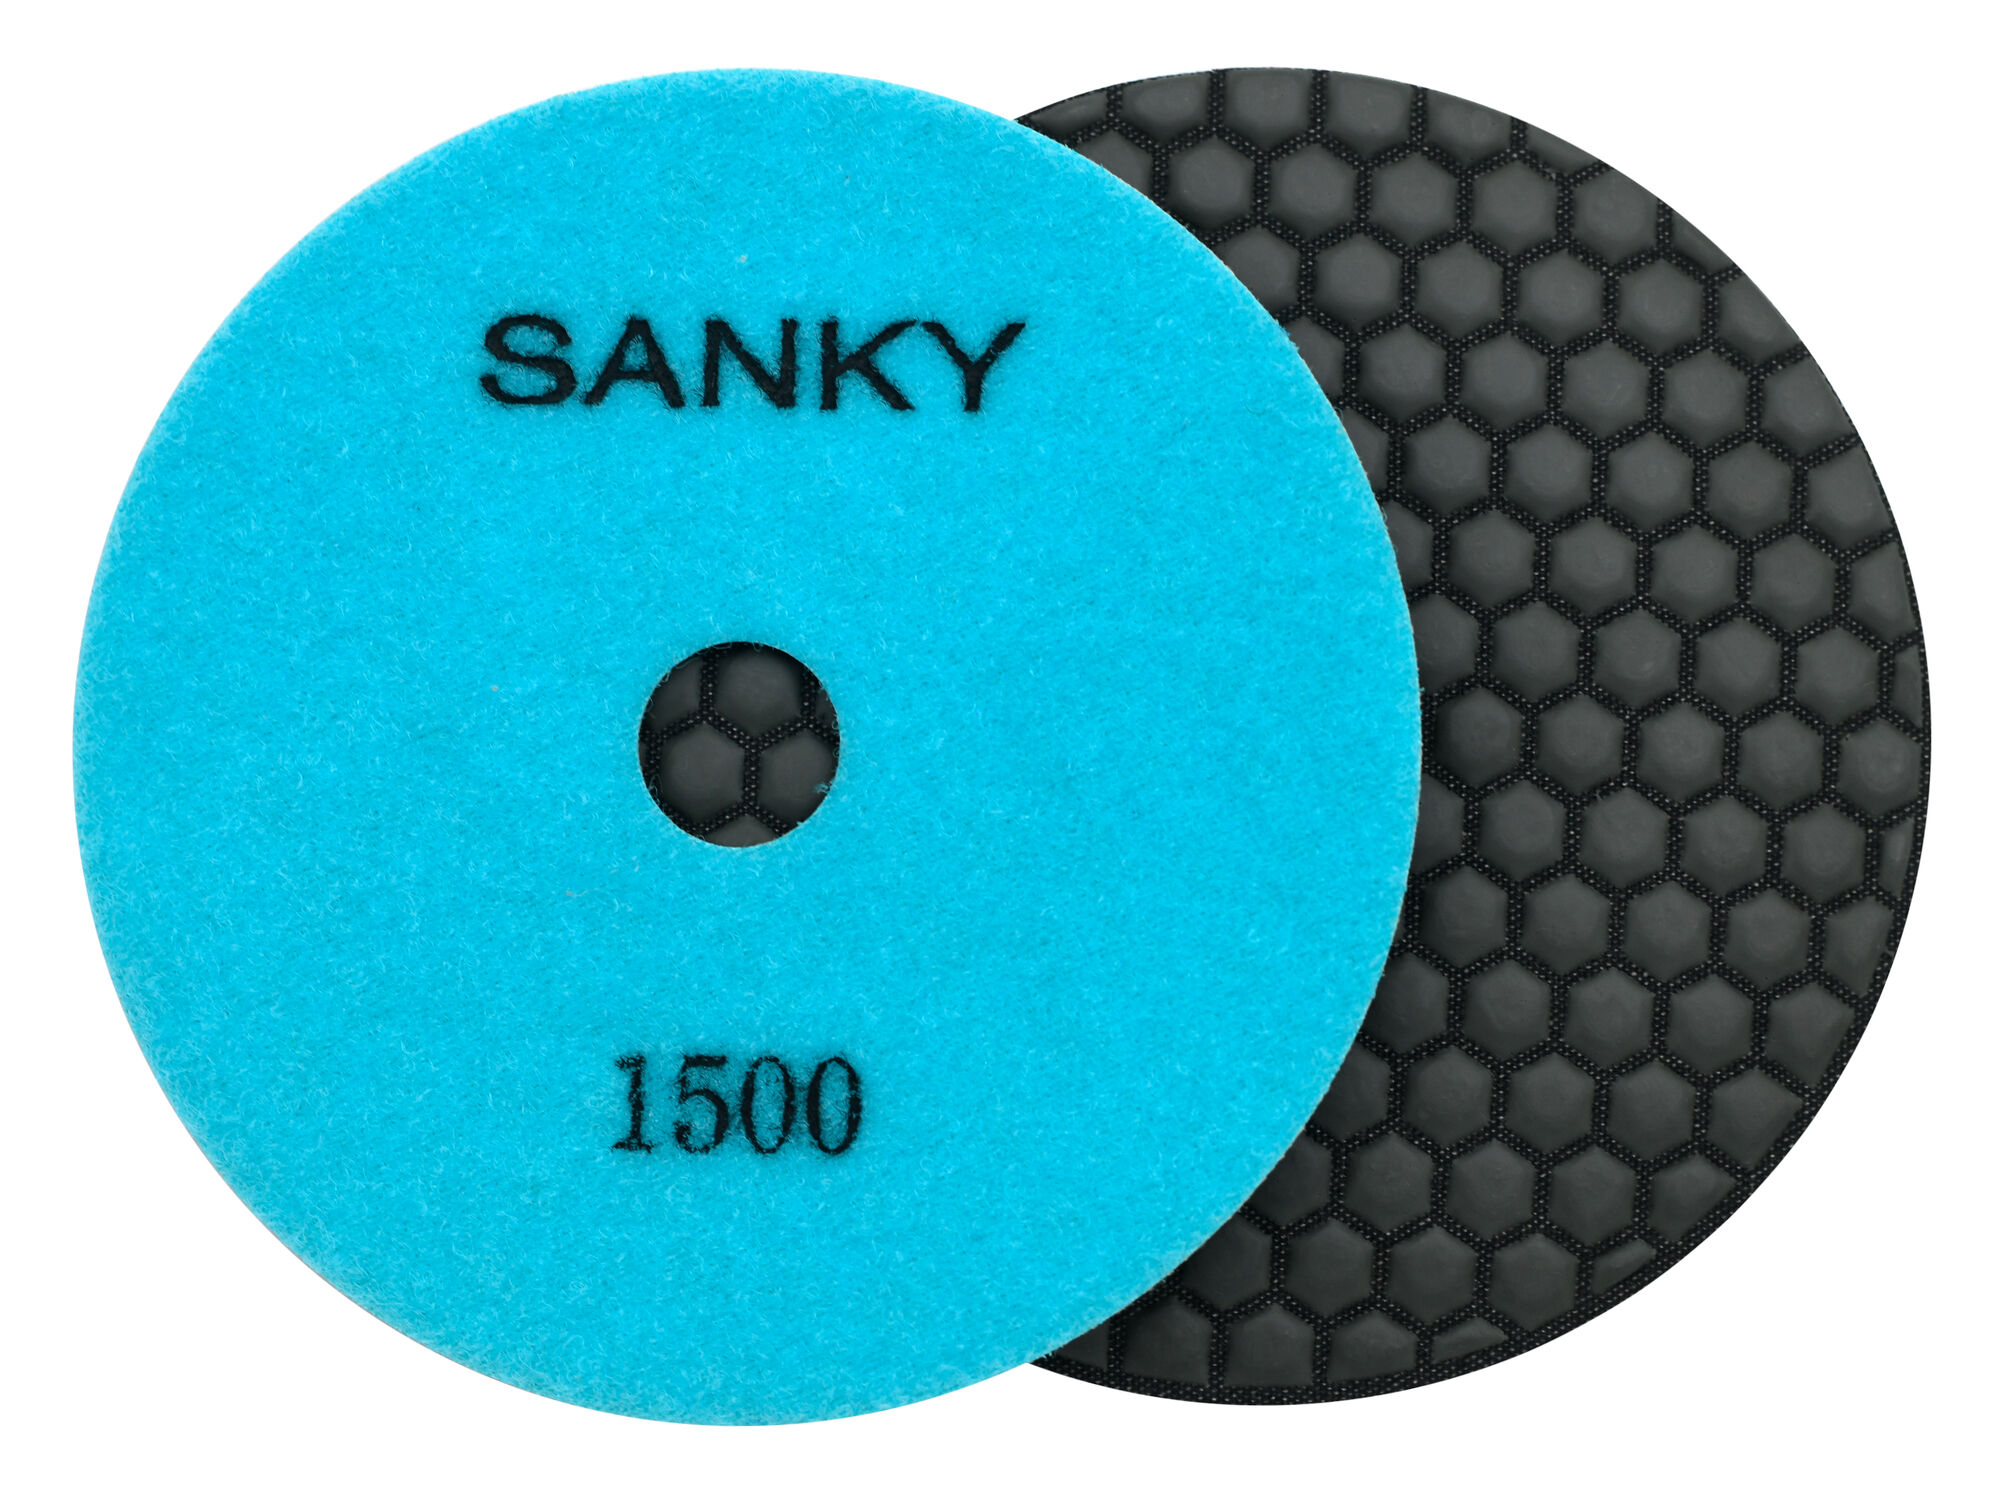 Алмазные гибкие диски № 1500 Ø 125 САНКИ cухие 1 шт